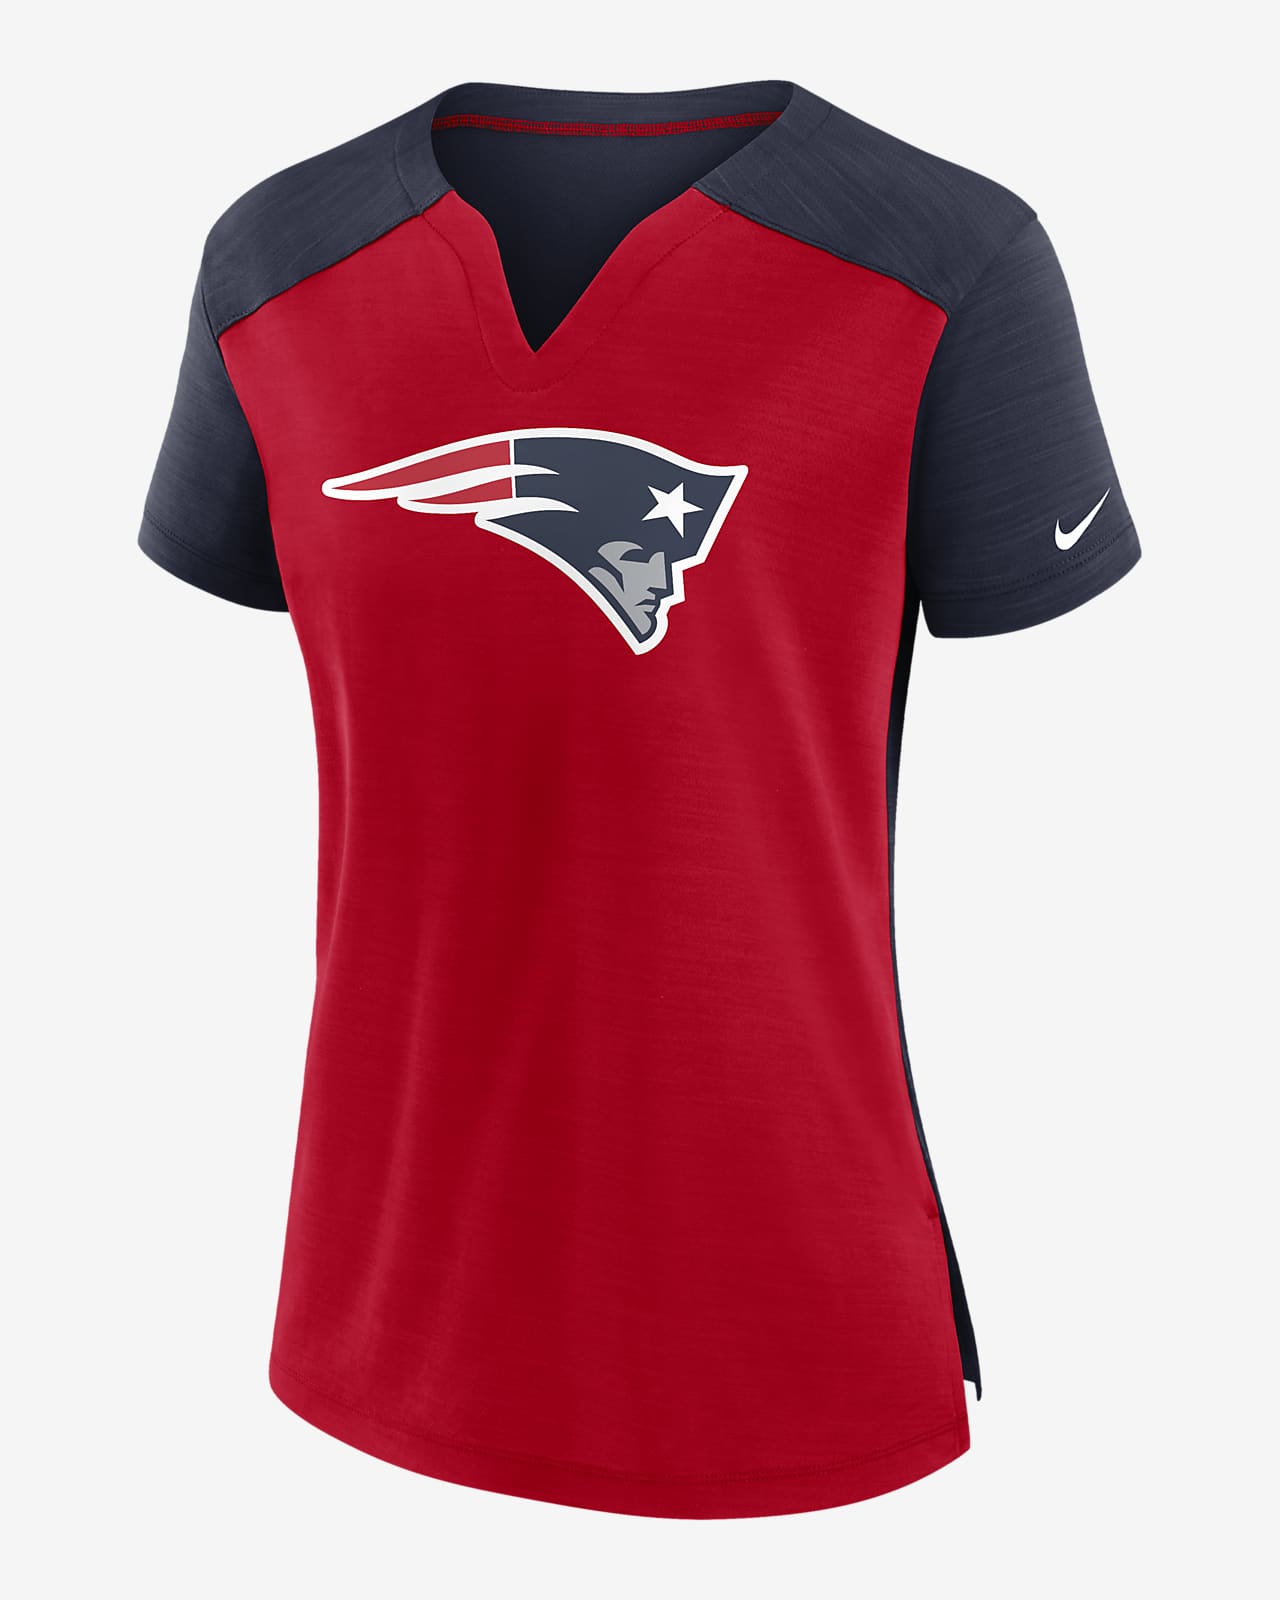 Nike Dri-FIT Exceed (NFL New England Patriots) Women's T-Shirt